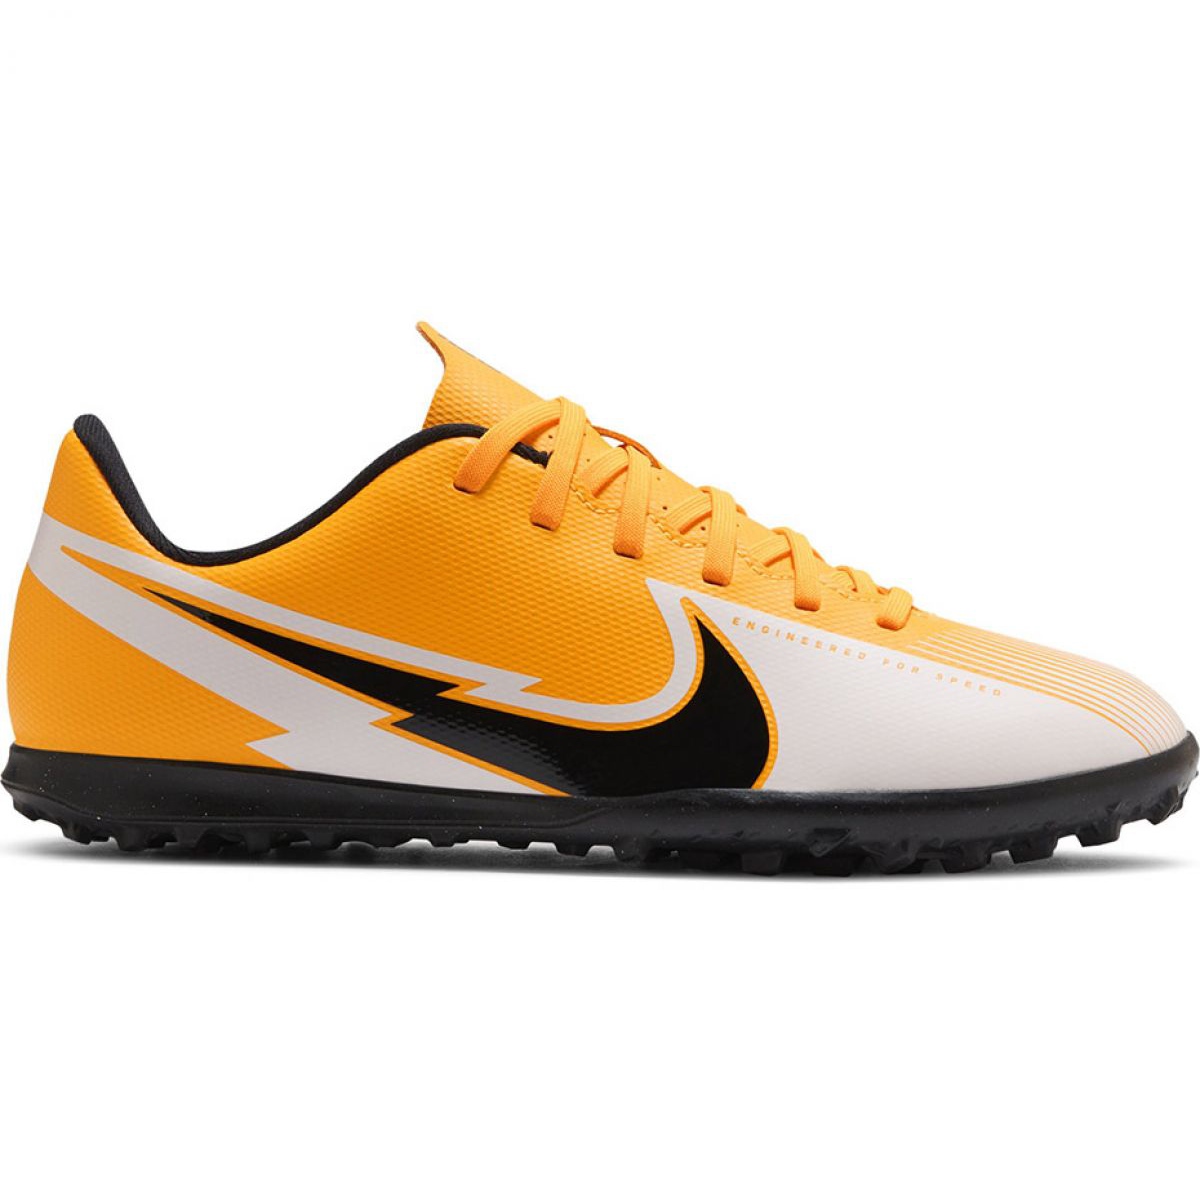 Buty piłkarskie Nike Mercurial Vapor 13 Club Tf Jr AT8177 801 żółte